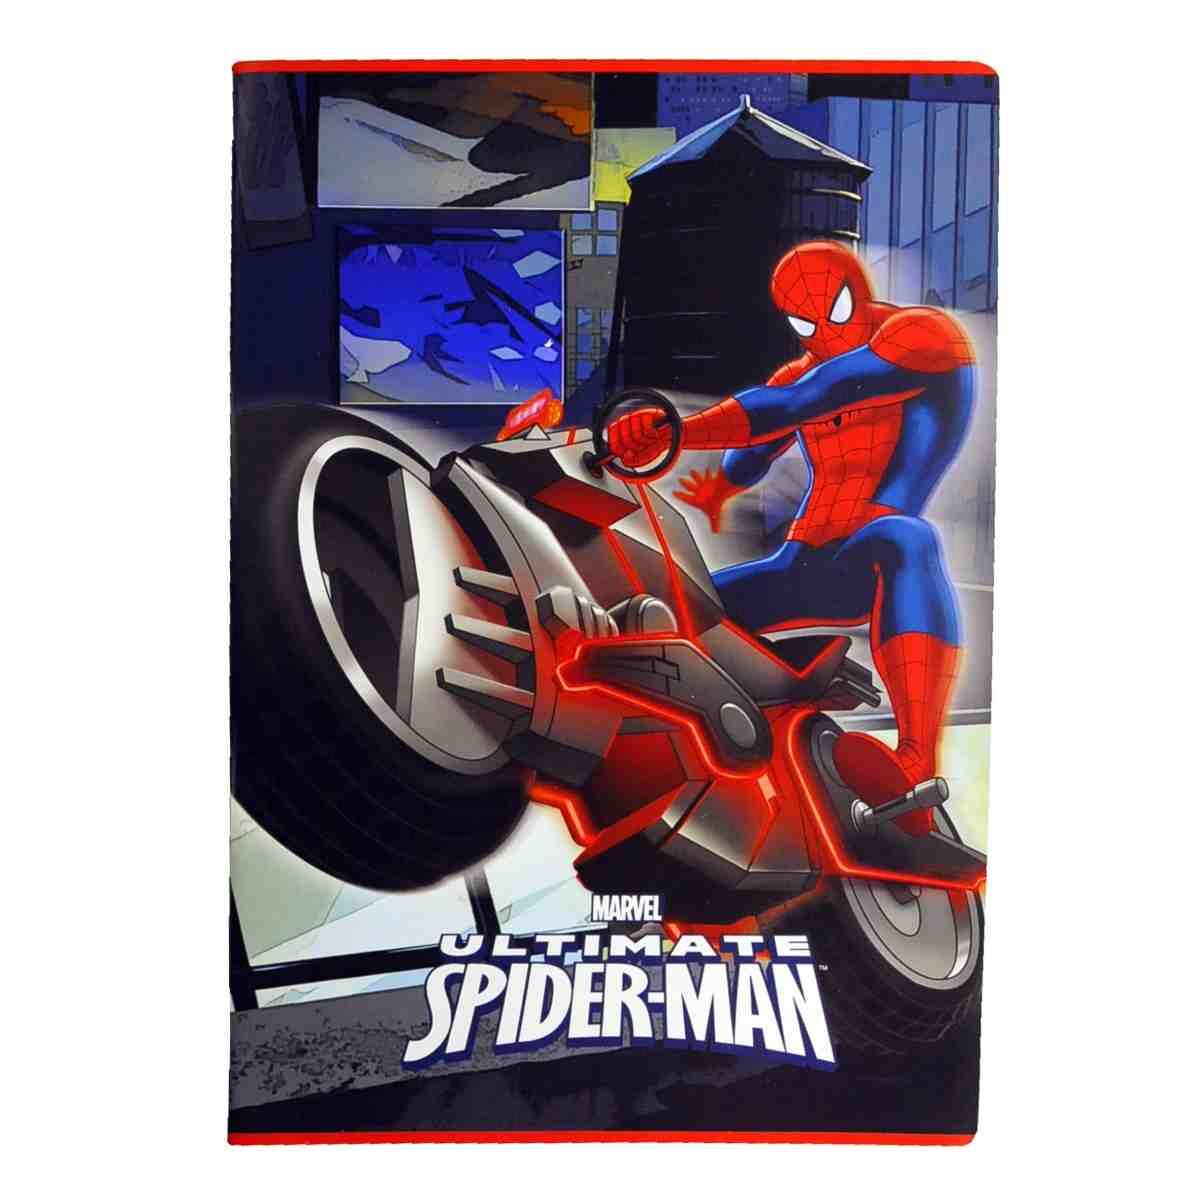 Quaderno Spiderman A4 Rigatura C Hakan